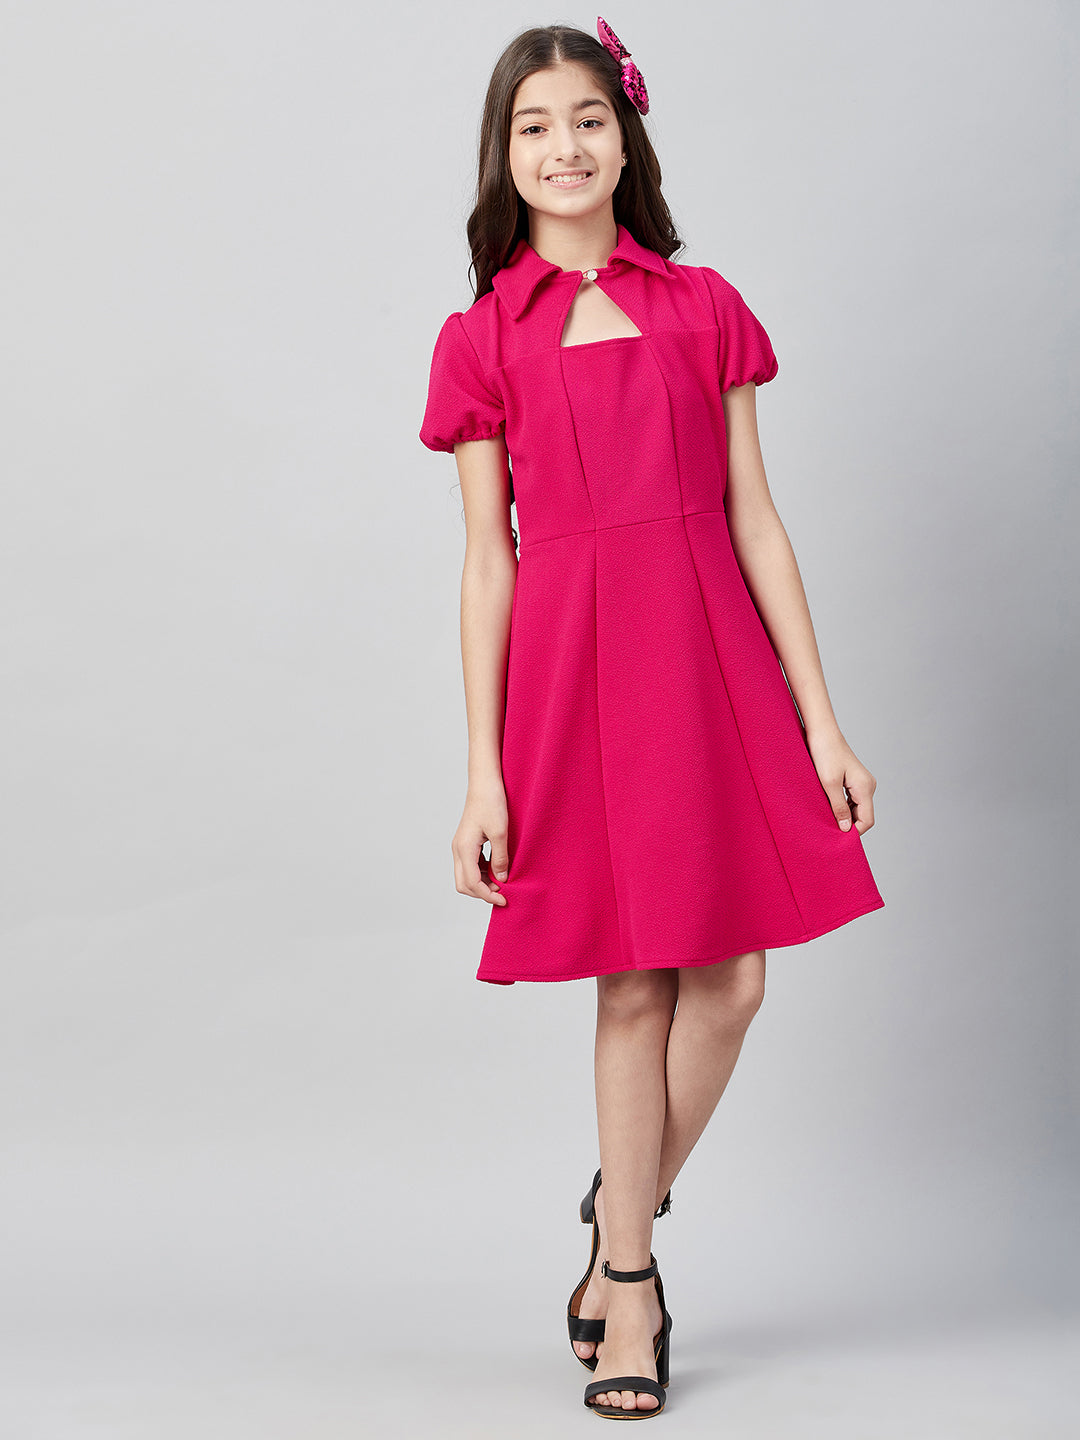 Athena Girl Pink Dress